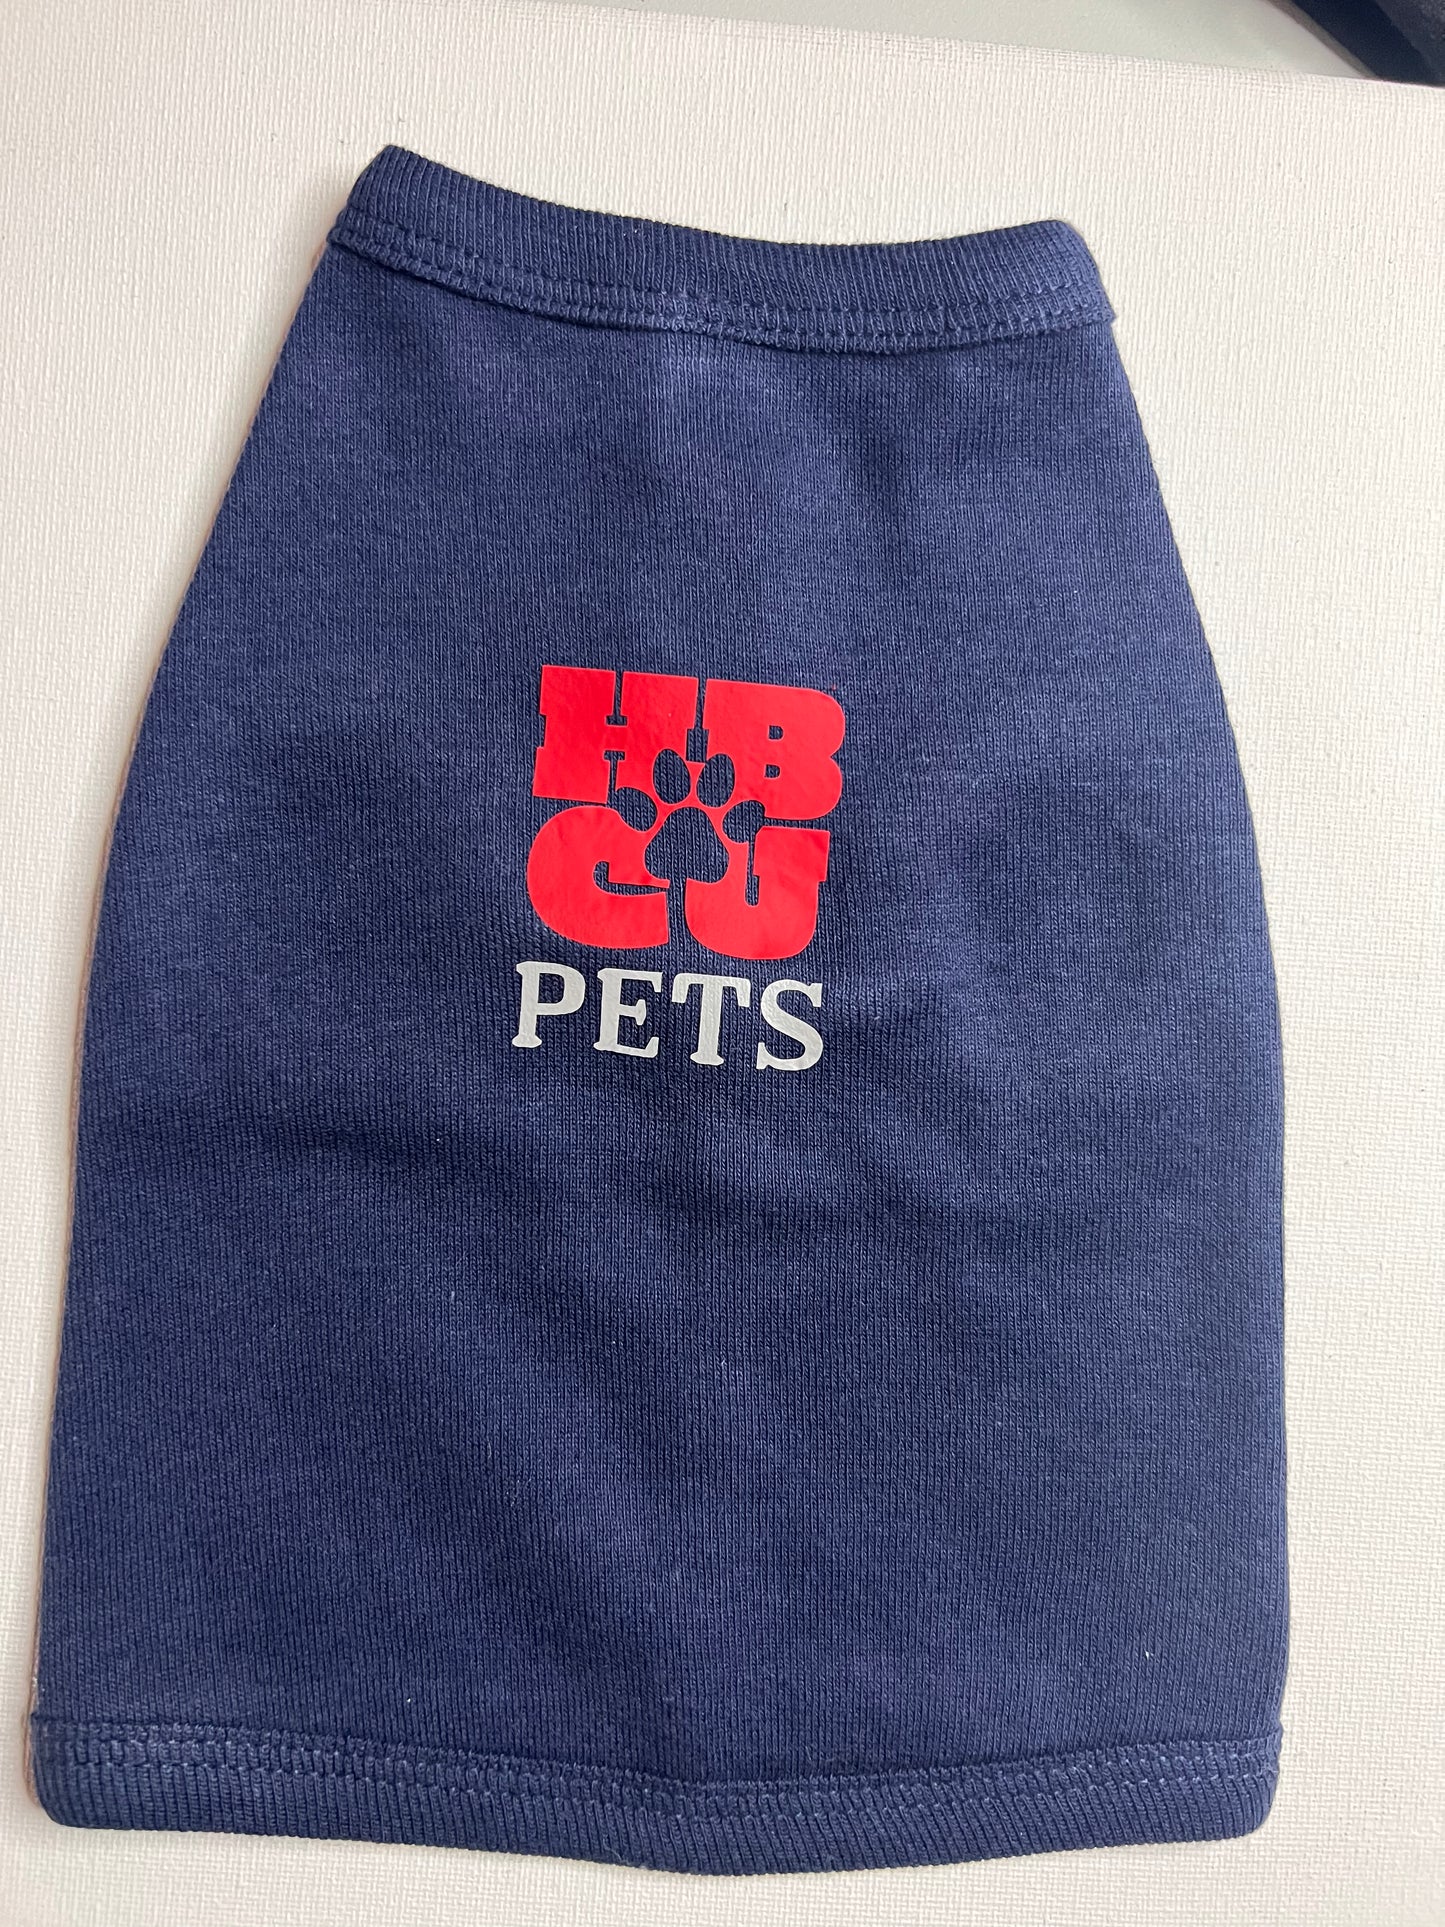 HBCU Pets-Navy, Red, & Grey Colorway Pet t-shirt